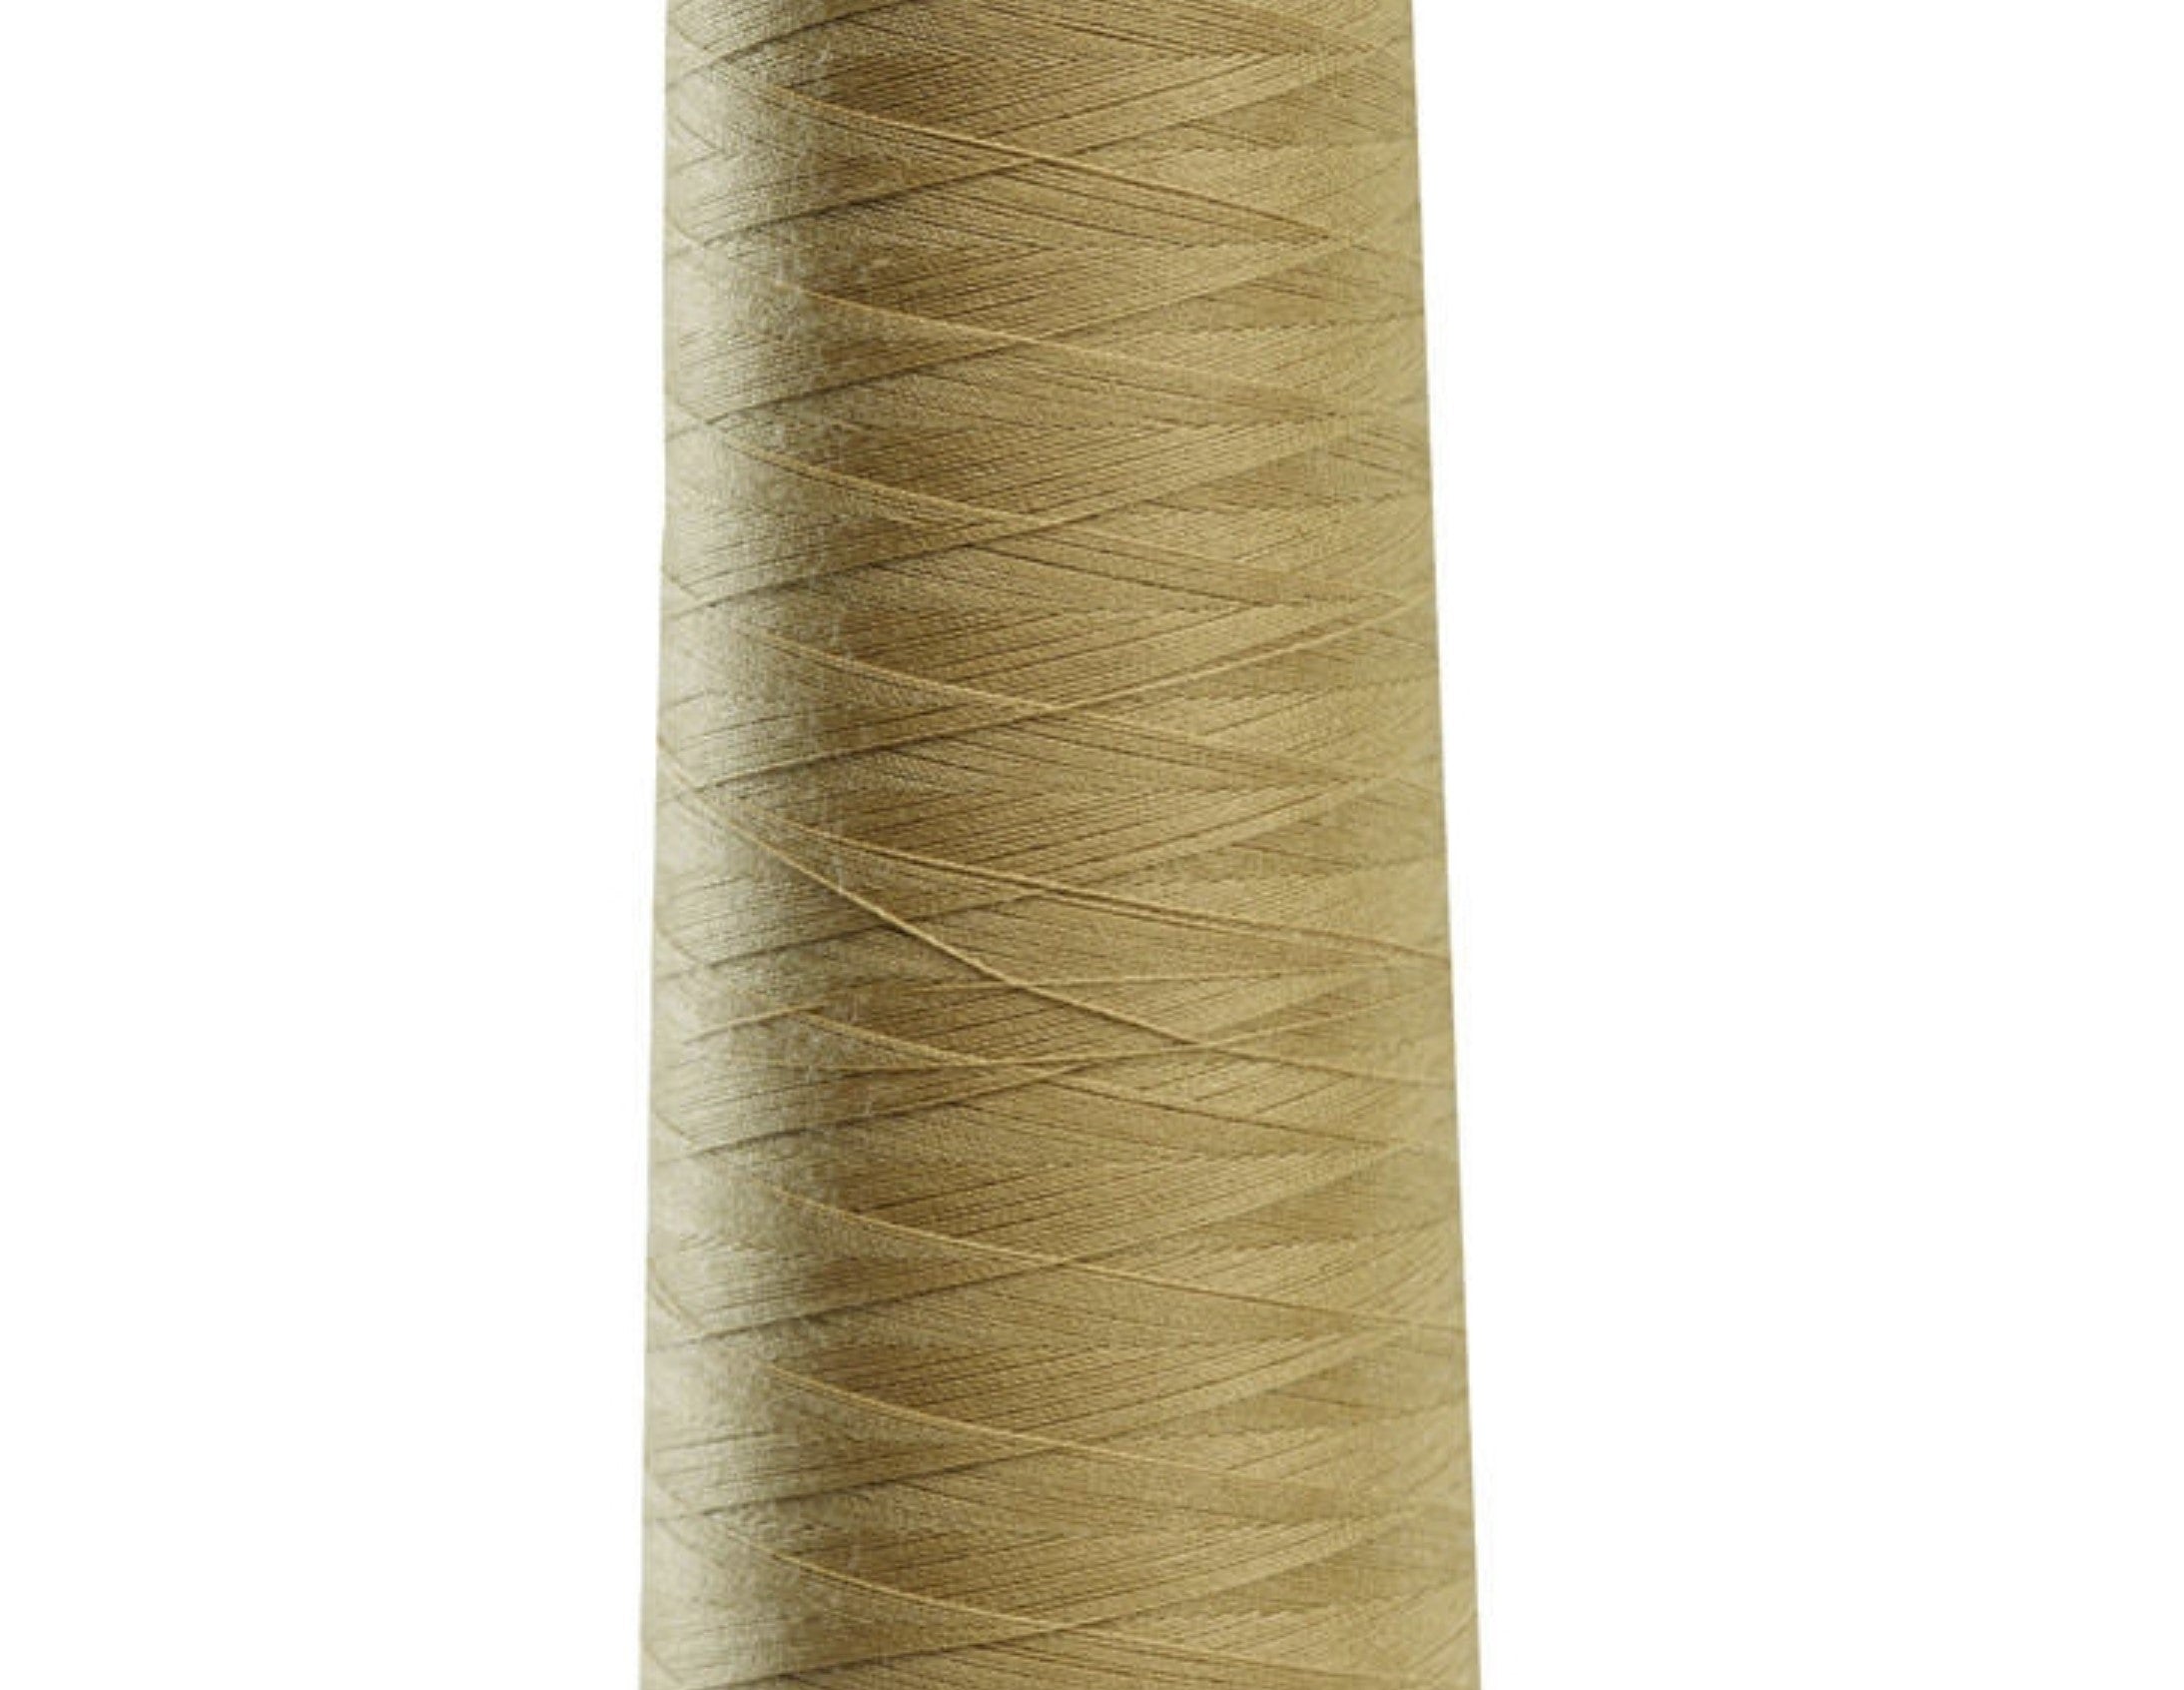 Khaki Color, Aerolock Premium Serger Thread, Ref. 9939 by Madeira®